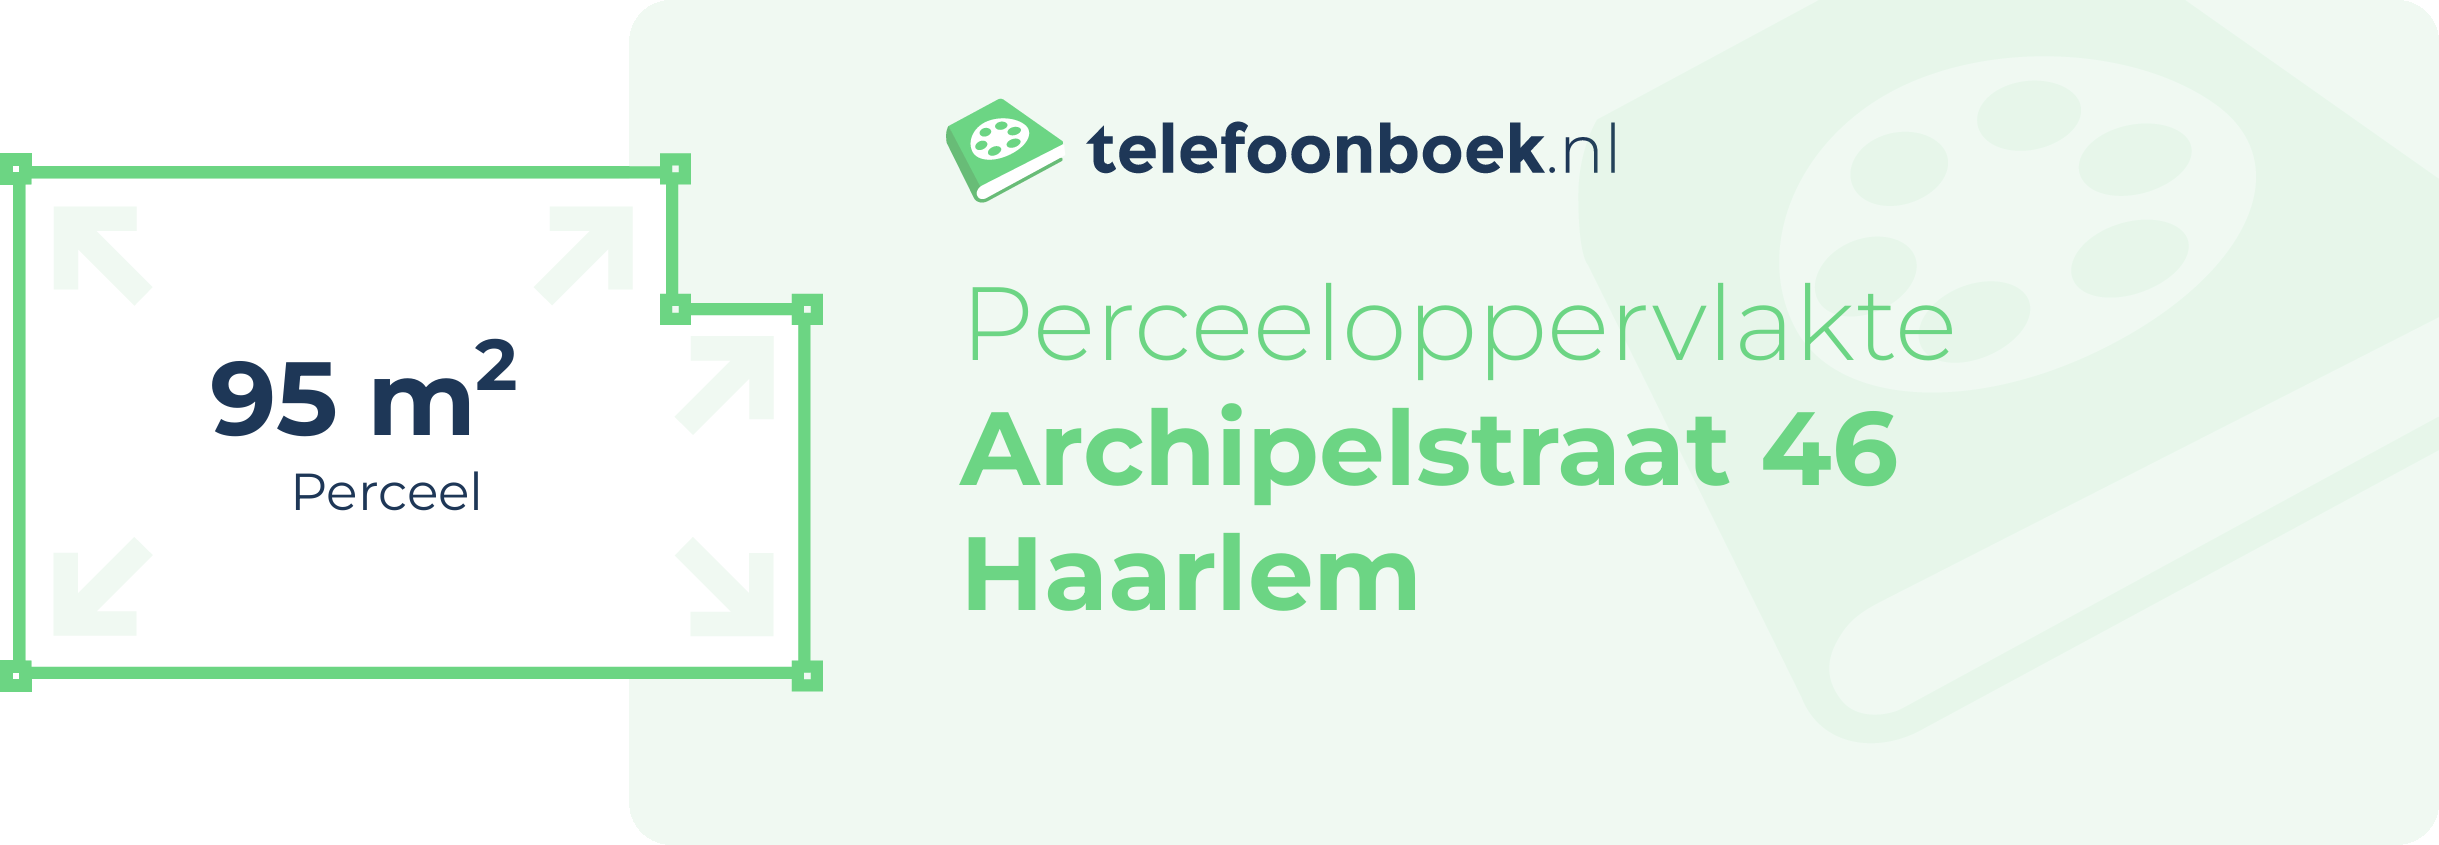 Perceeloppervlakte Archipelstraat 46 Haarlem